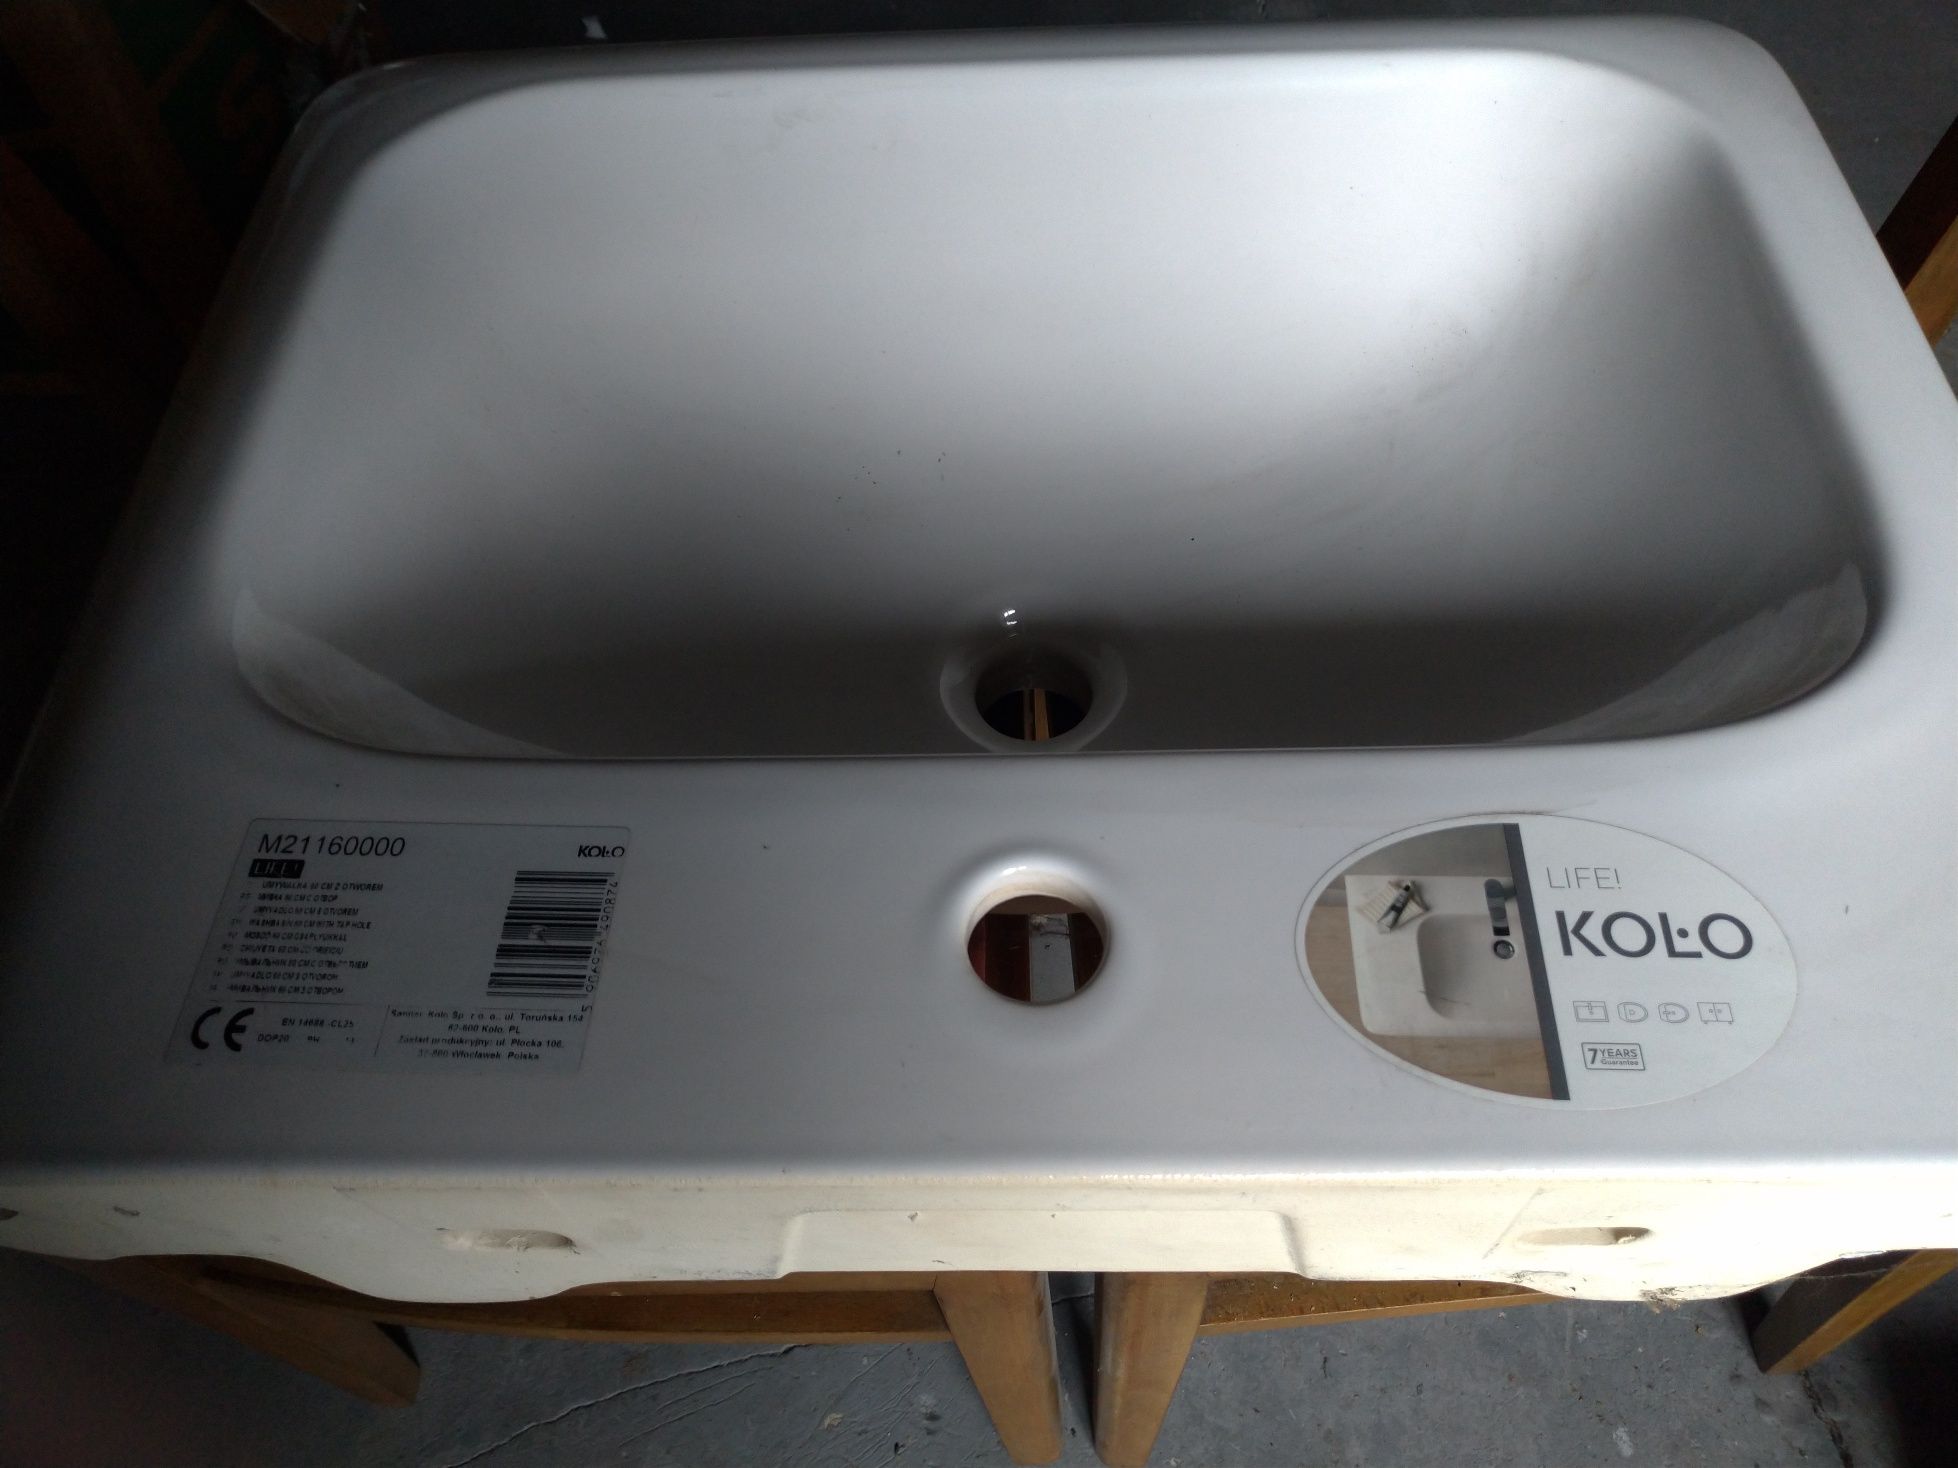 Umywalka firmy Kolo